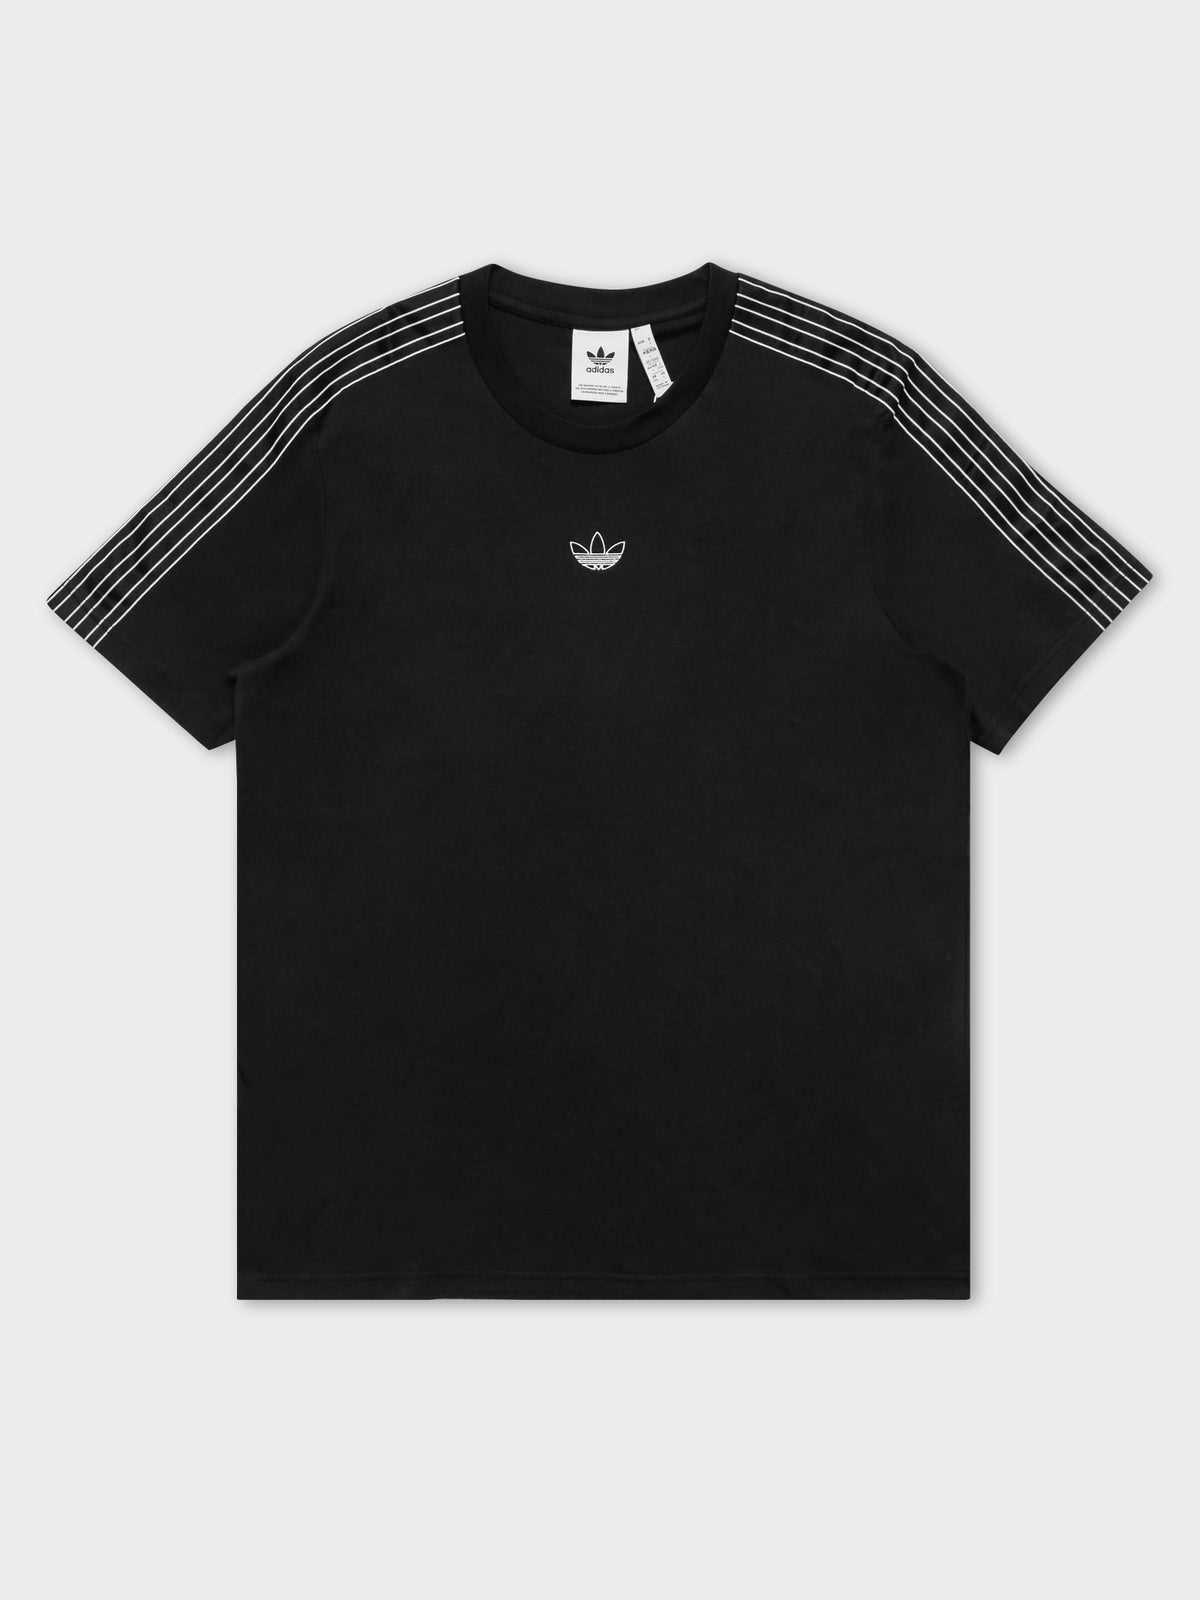 Sport 3 Stripes T-Shirt in Black &amp; Chalk White